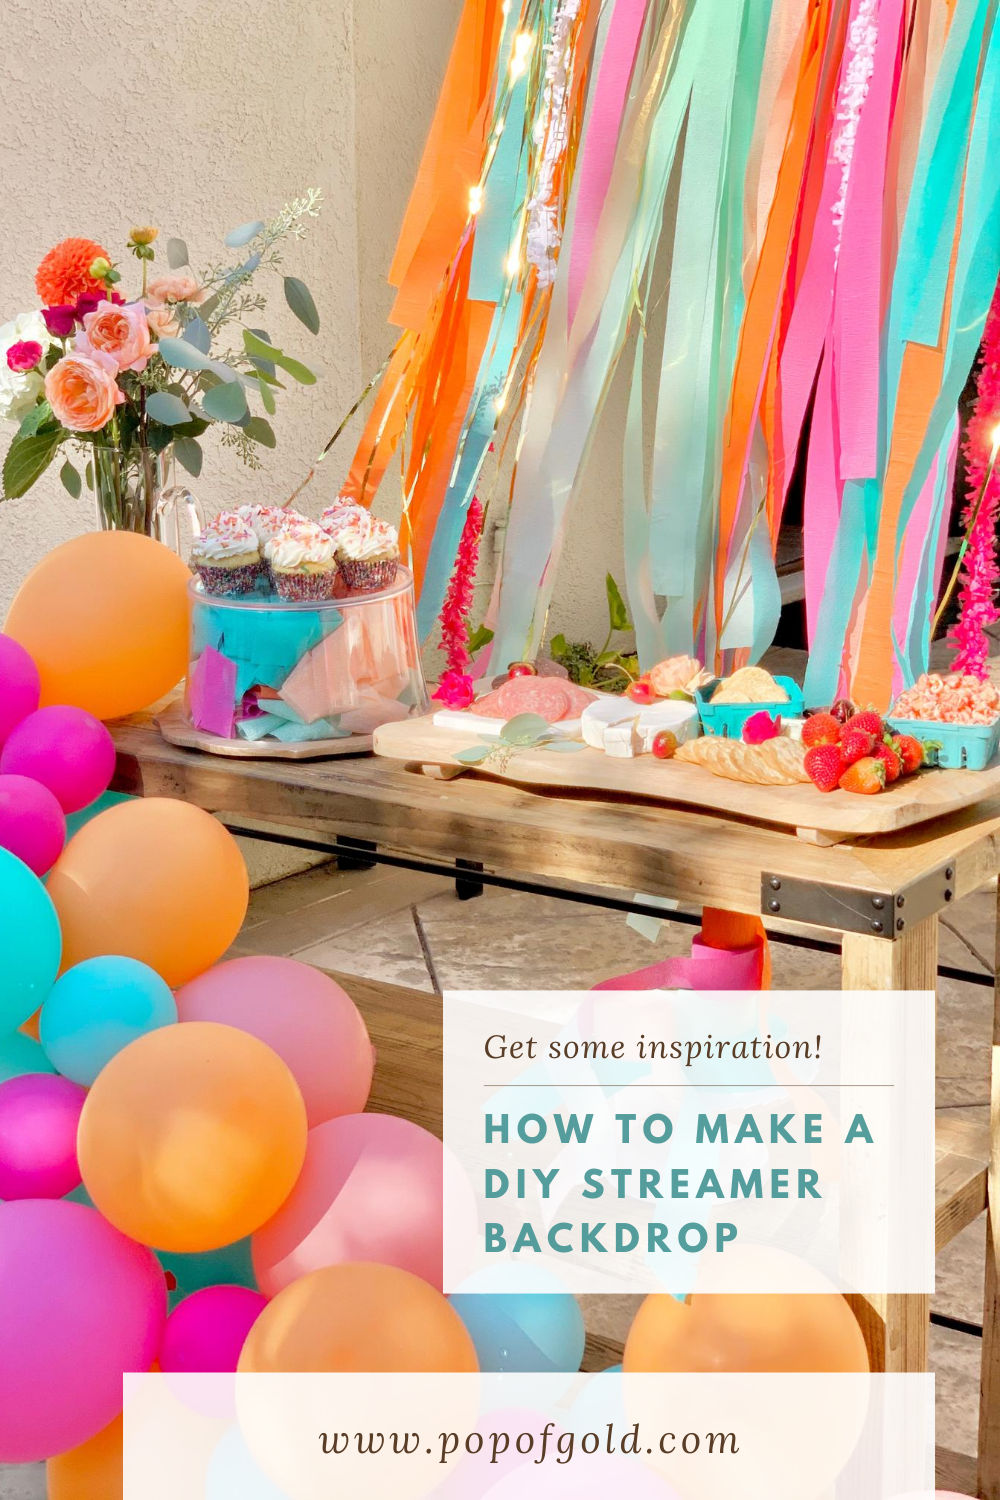 Crepe Paper Streamer DIY Party Decoration Ideas